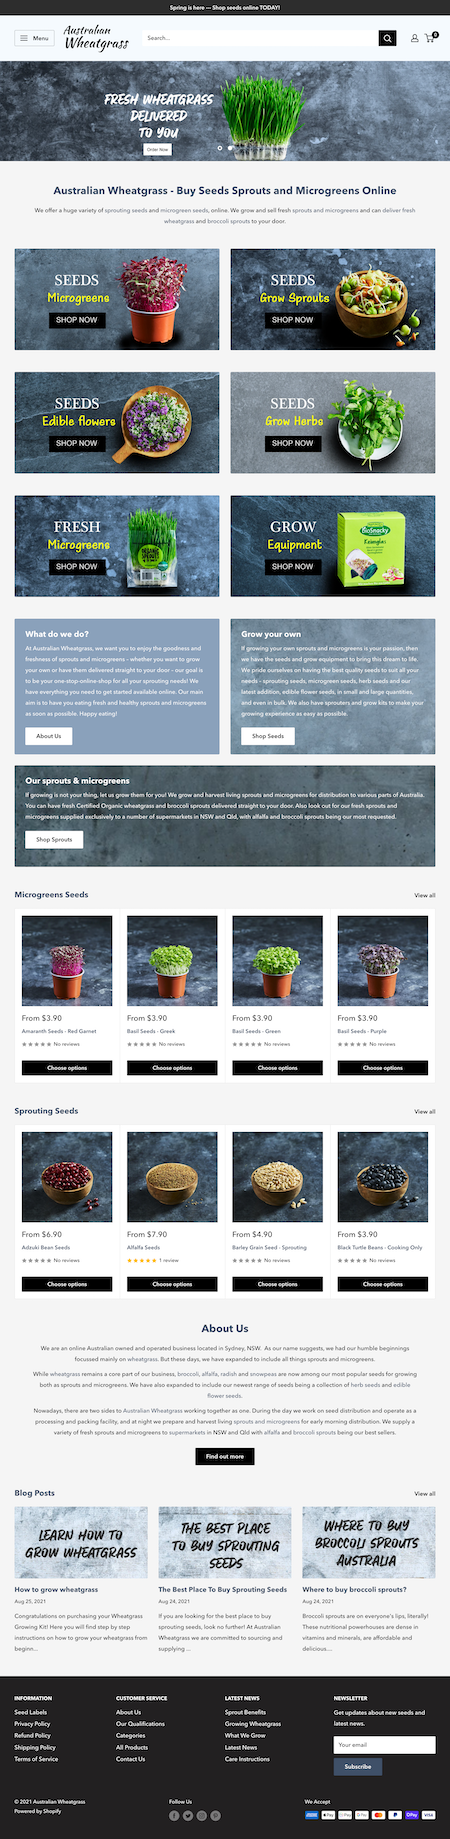 Australian Wheatgrass - Web Design Case Study